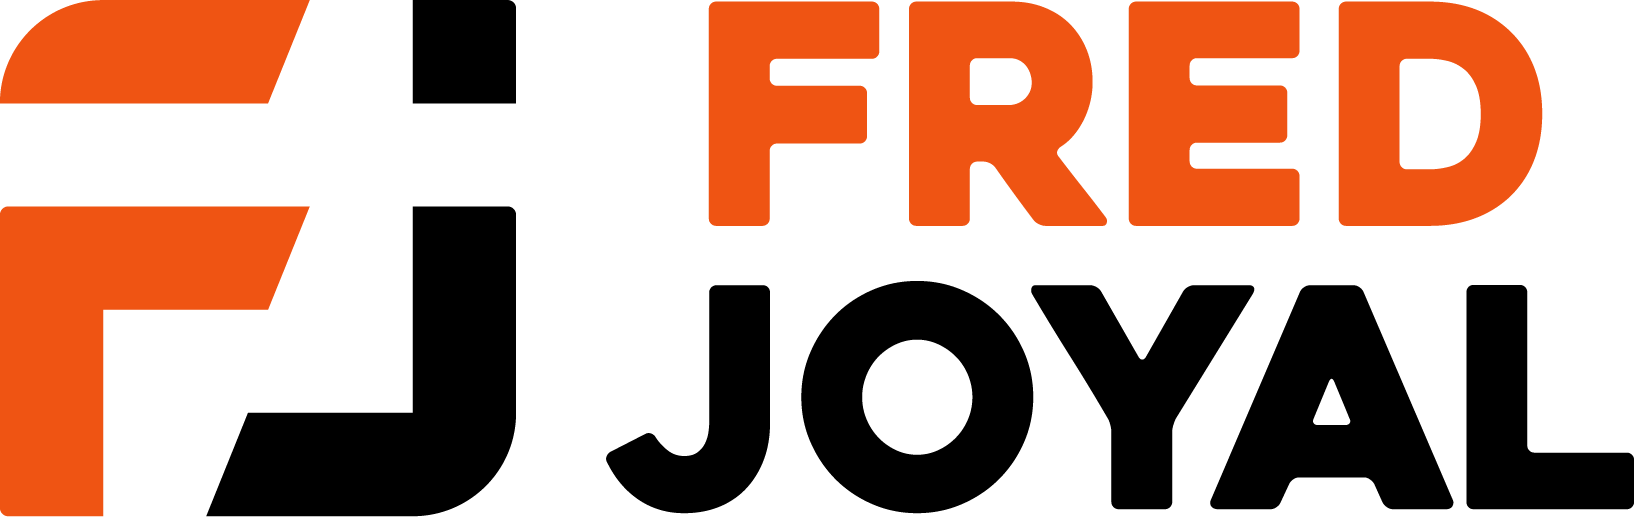 Fred Joyal Logo Full Color Version